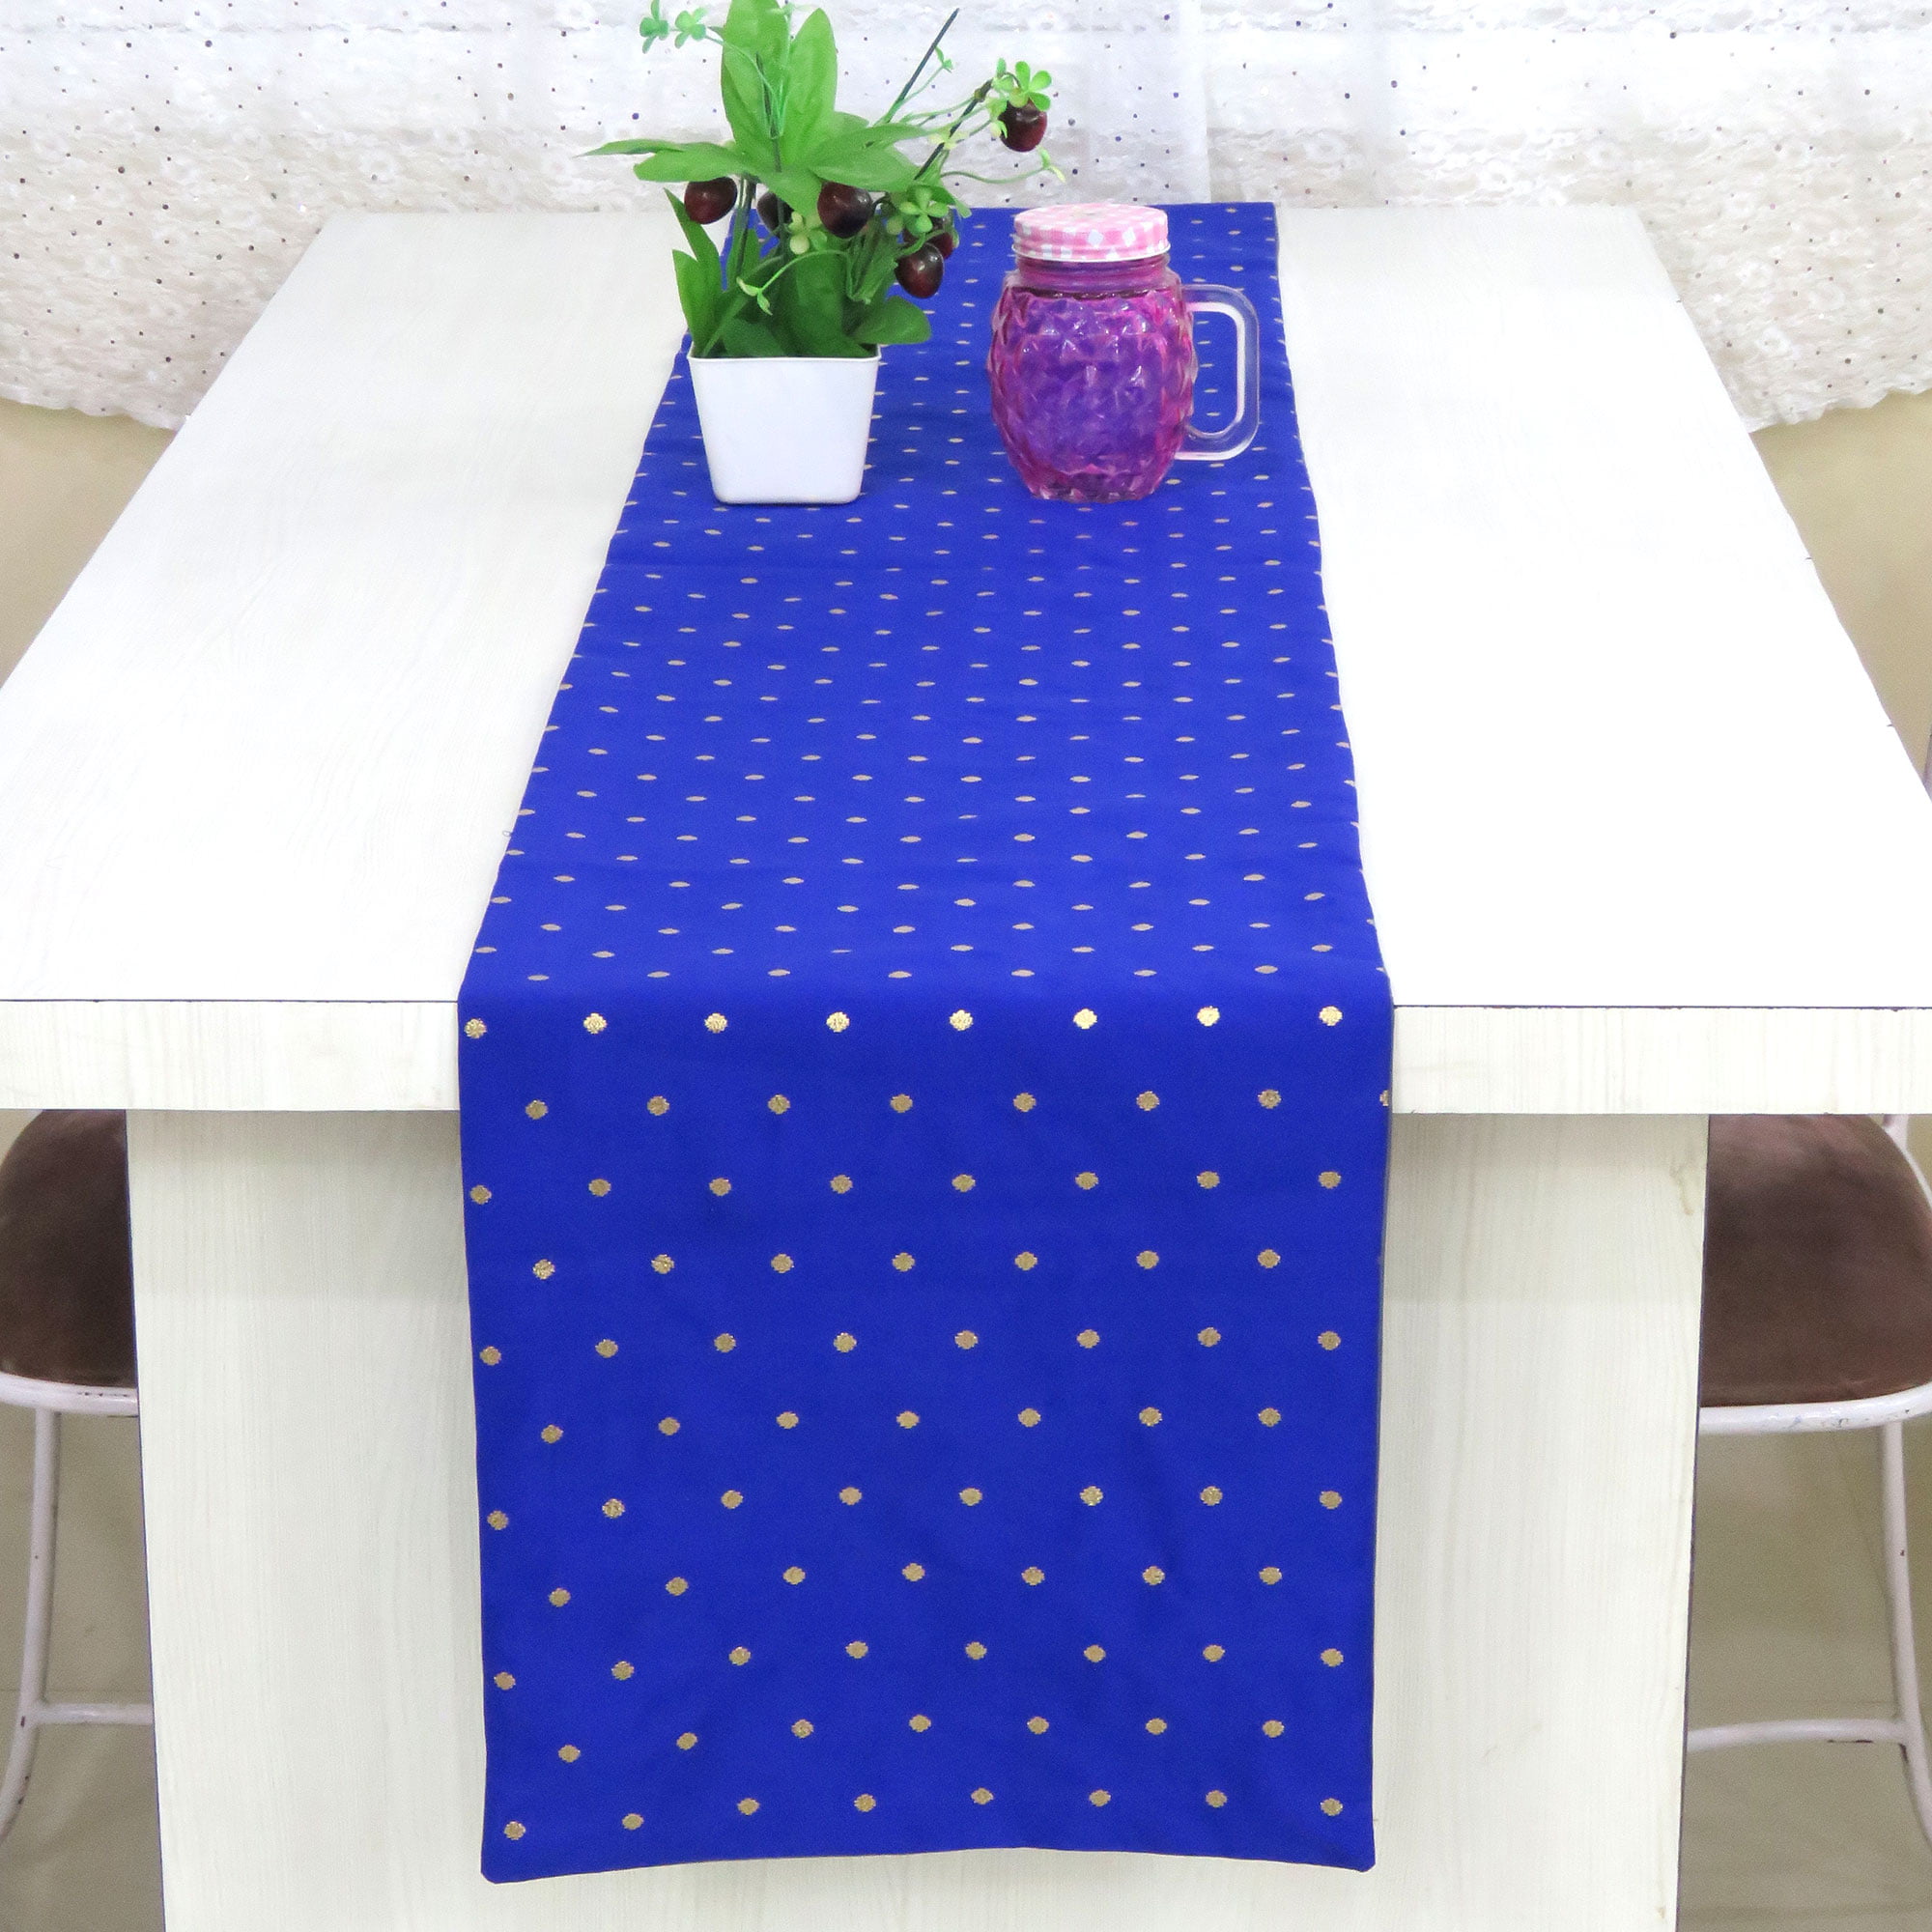 Brocade Table Runner Handmade Kitchen Dining Decorative Silk Tablecloth 12 X 72 